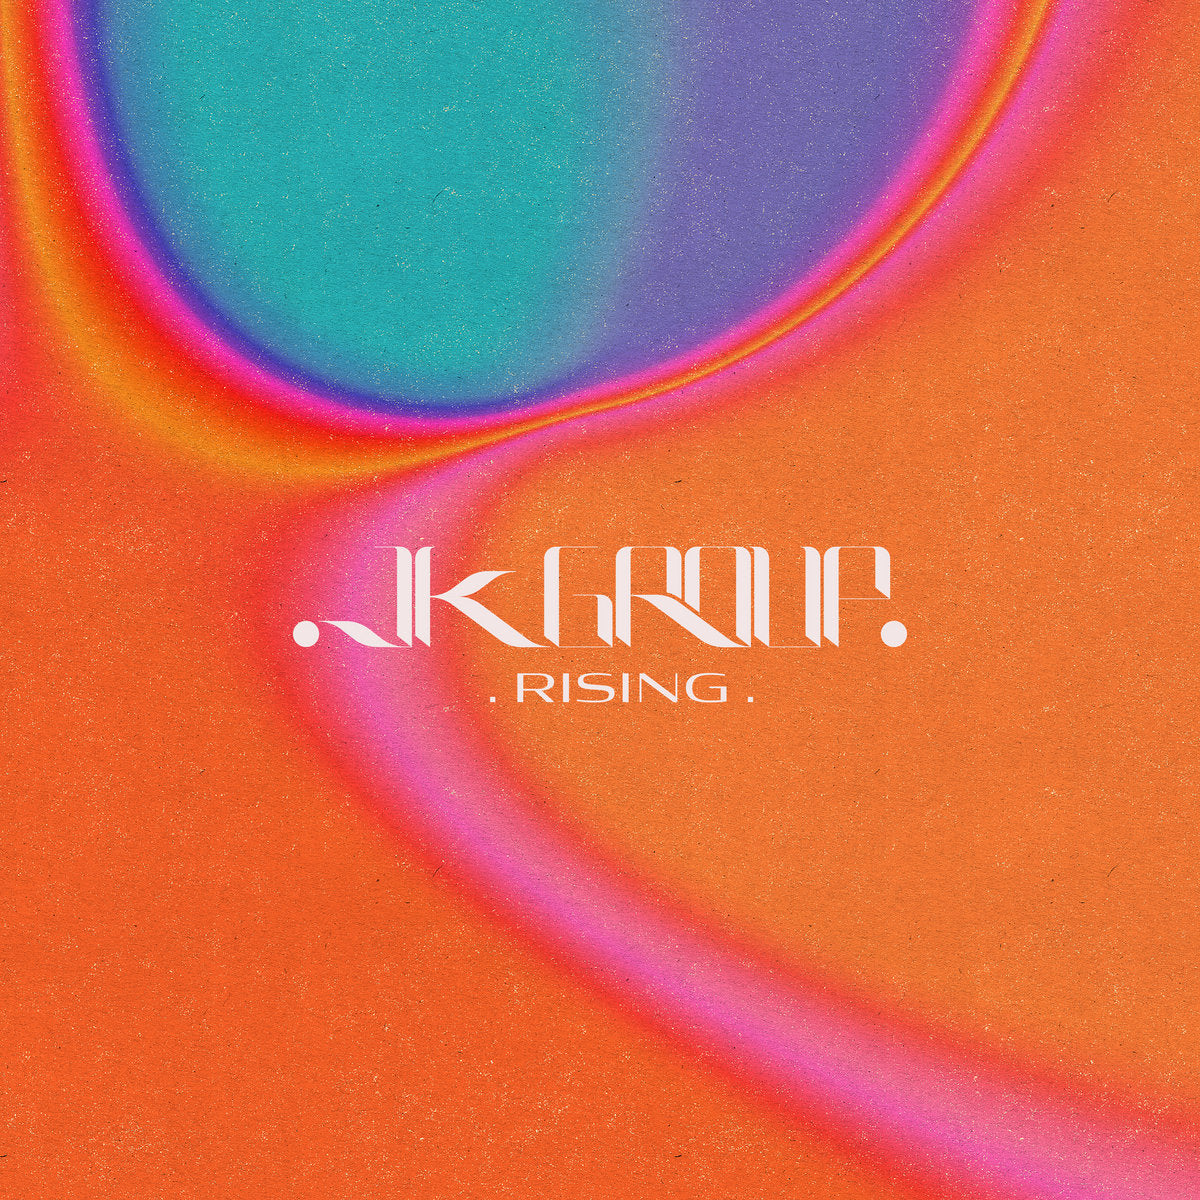 JK GROUP - "RISING" LP